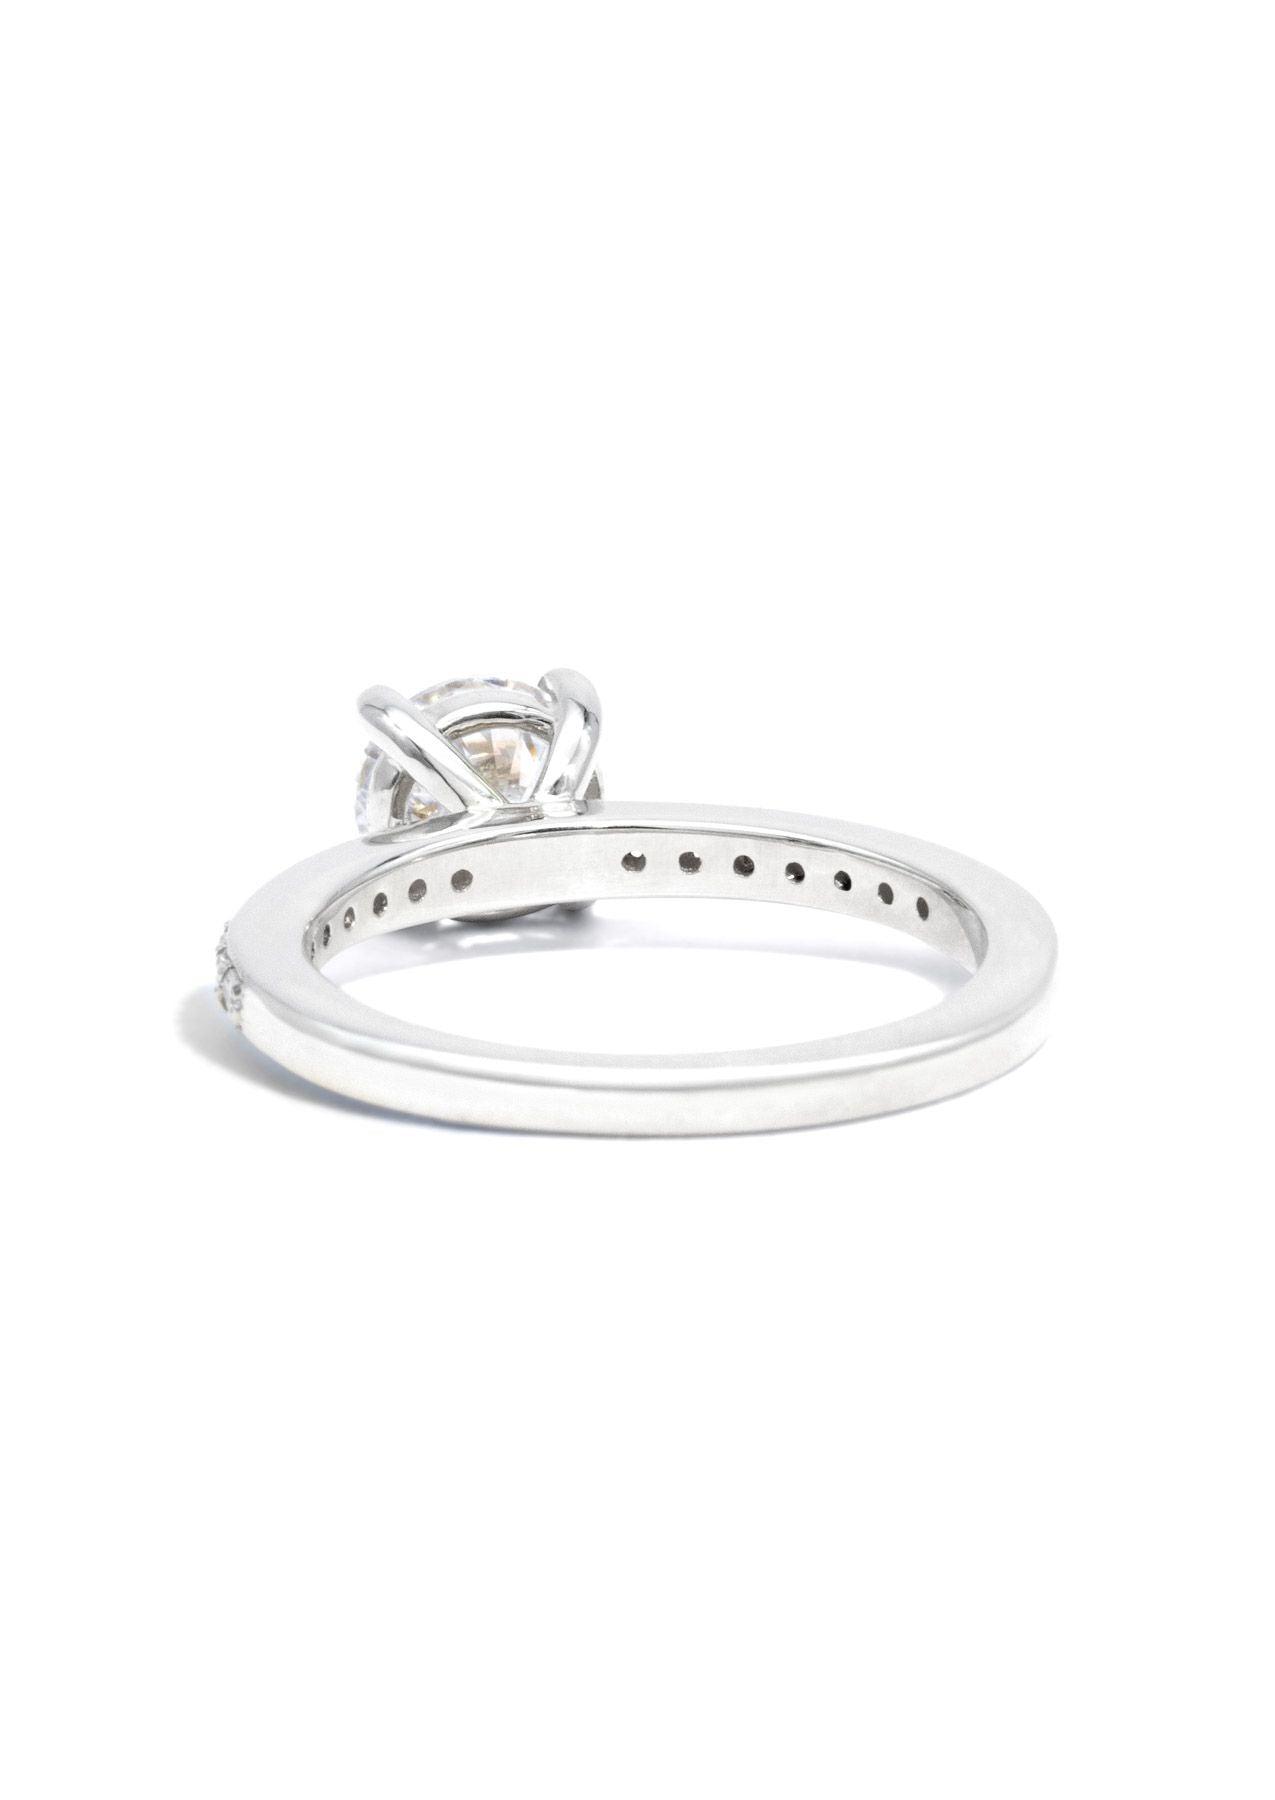 The Juliette White Gold Cultured Diamond Ring